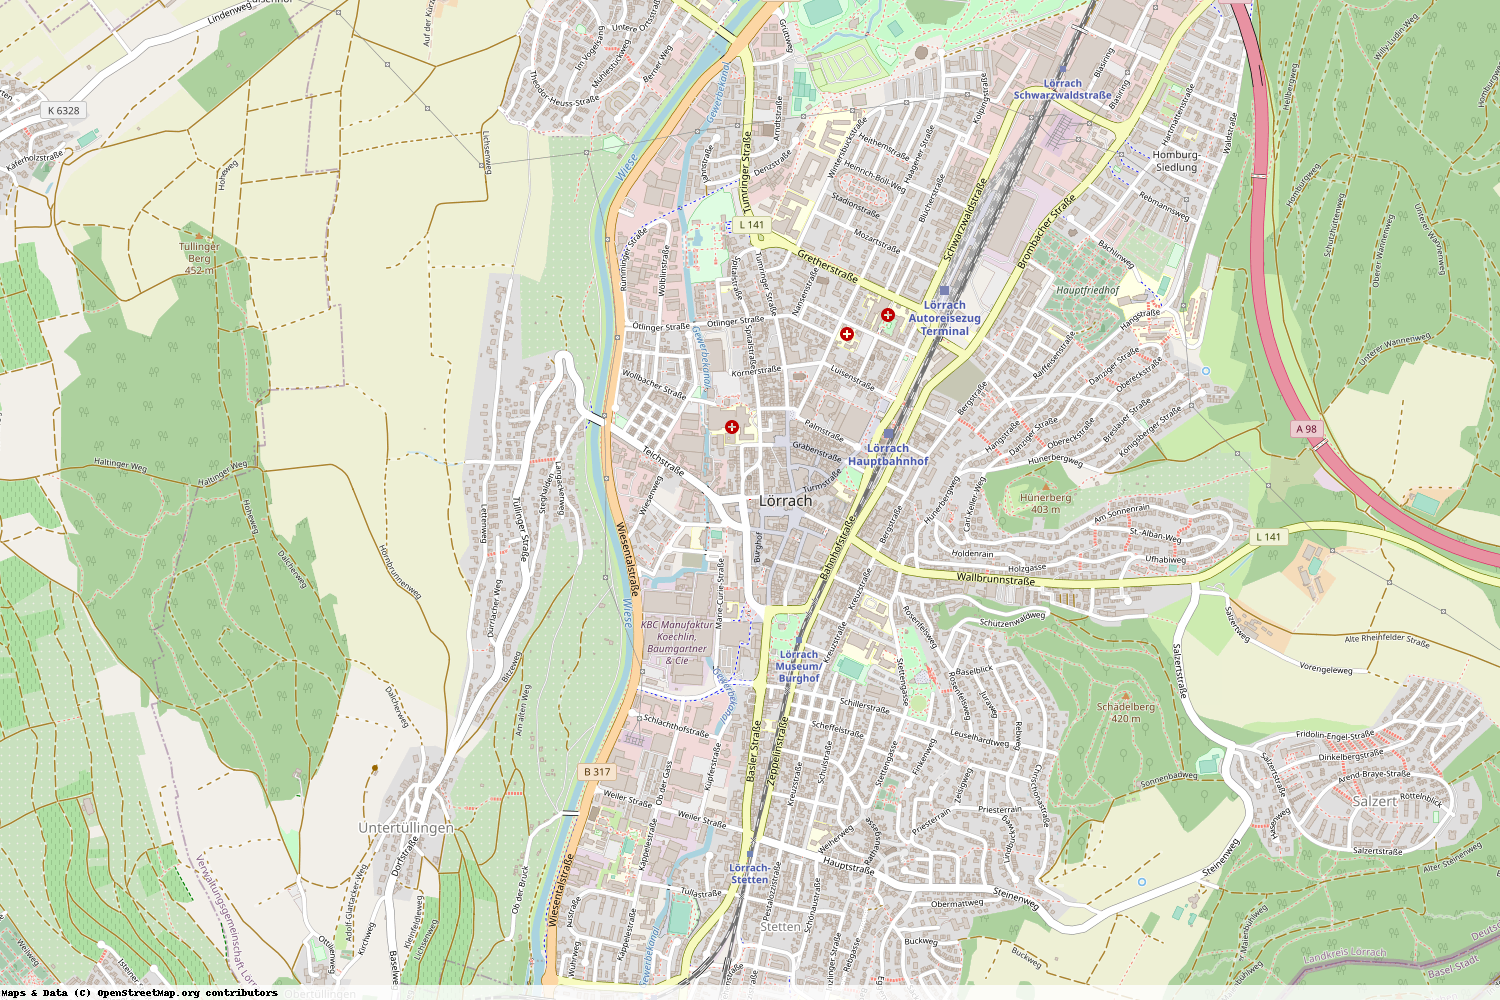 Ist gerade Stromausfall in Baden-Württemberg - Lörrach - Lörrach?